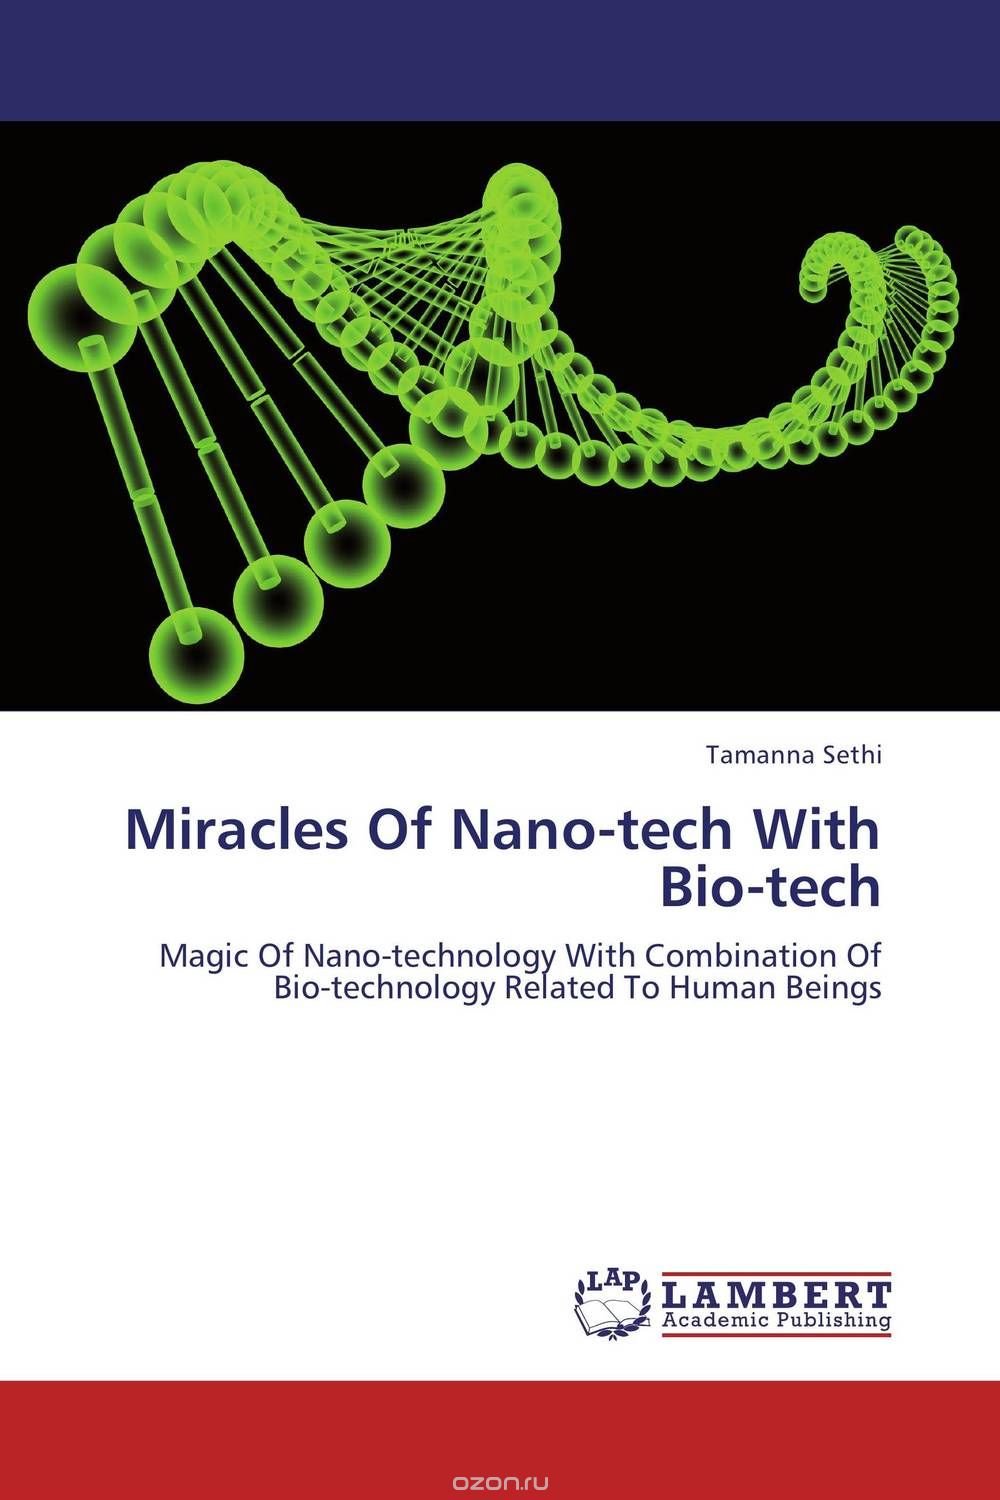 Скачать книгу "Miracles Of Nano-tech With Bio-tech"